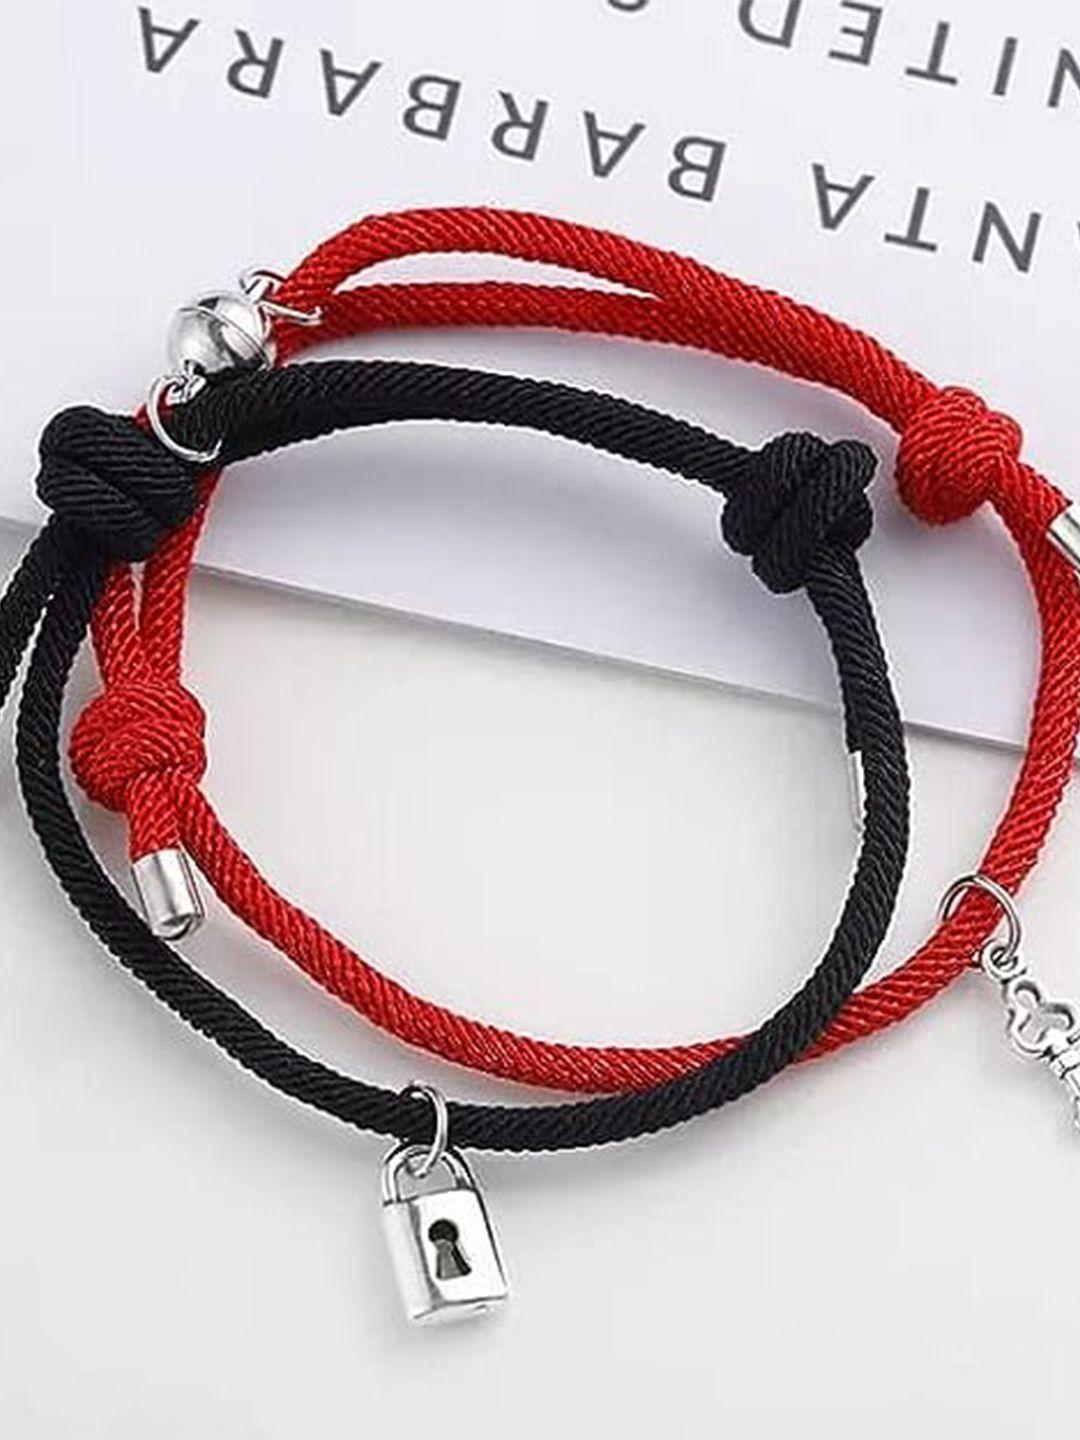 krystalz unisex 2 red charm bracelet